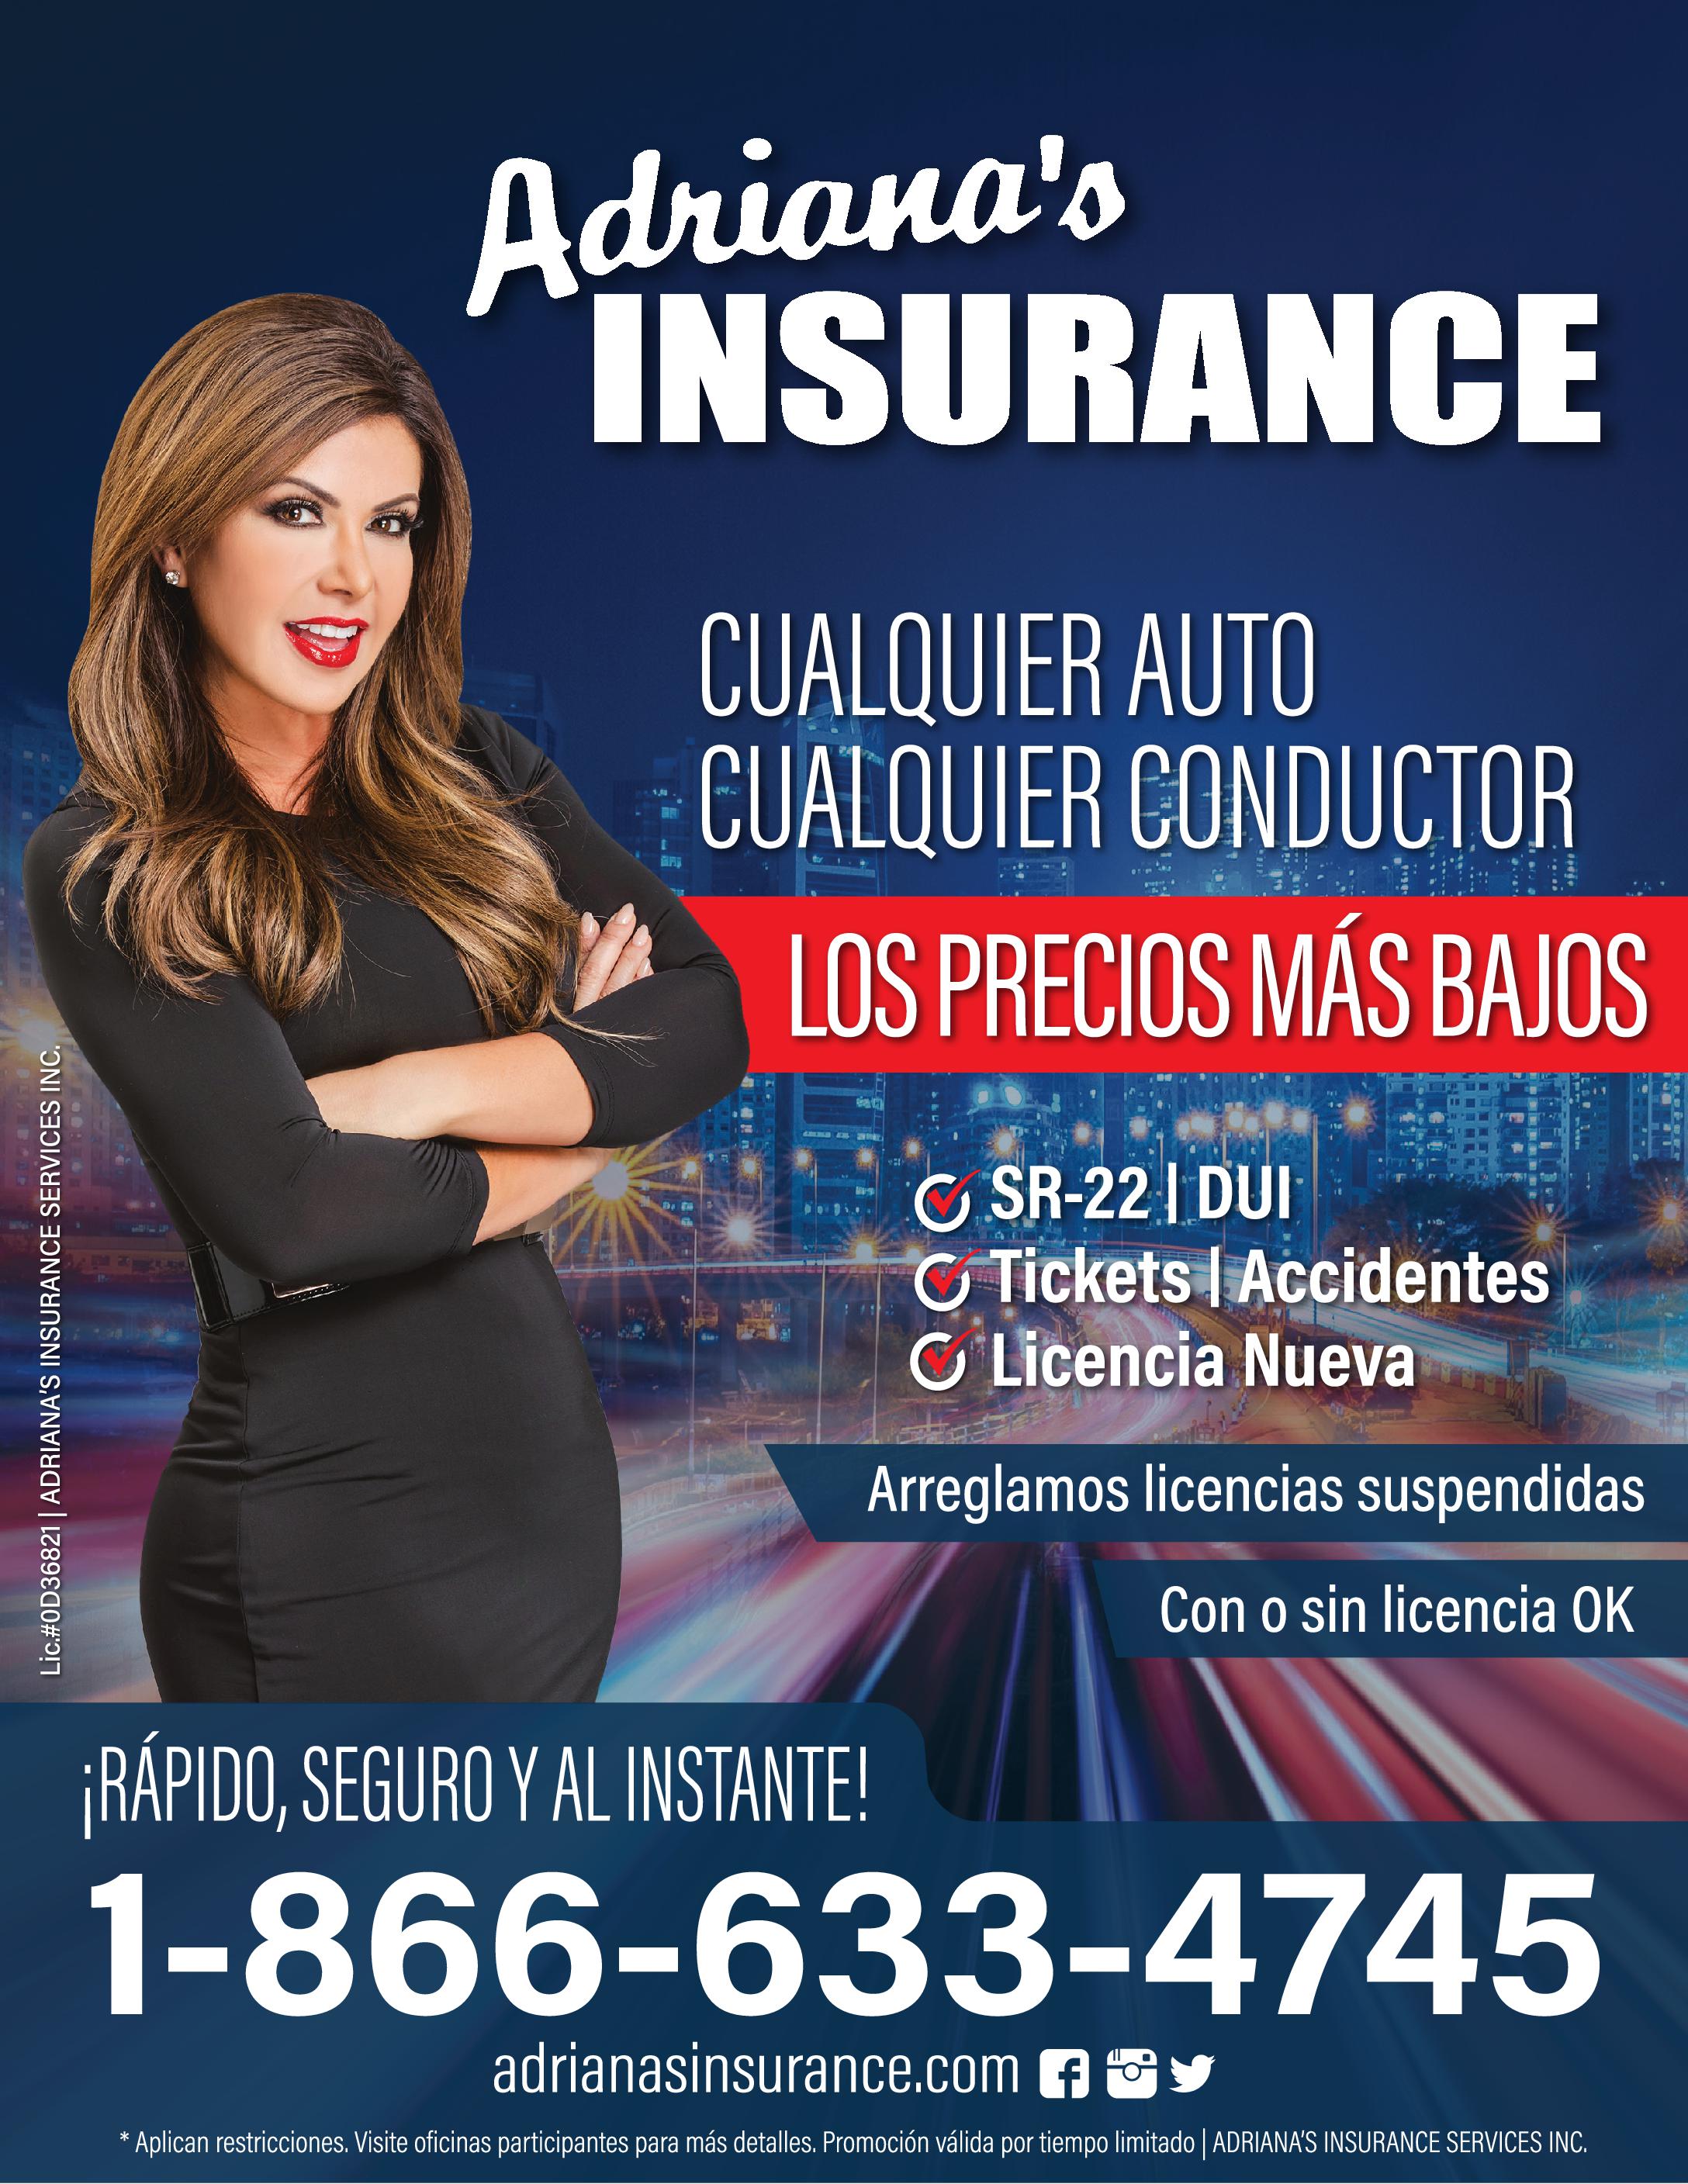 Adrianas Insurance